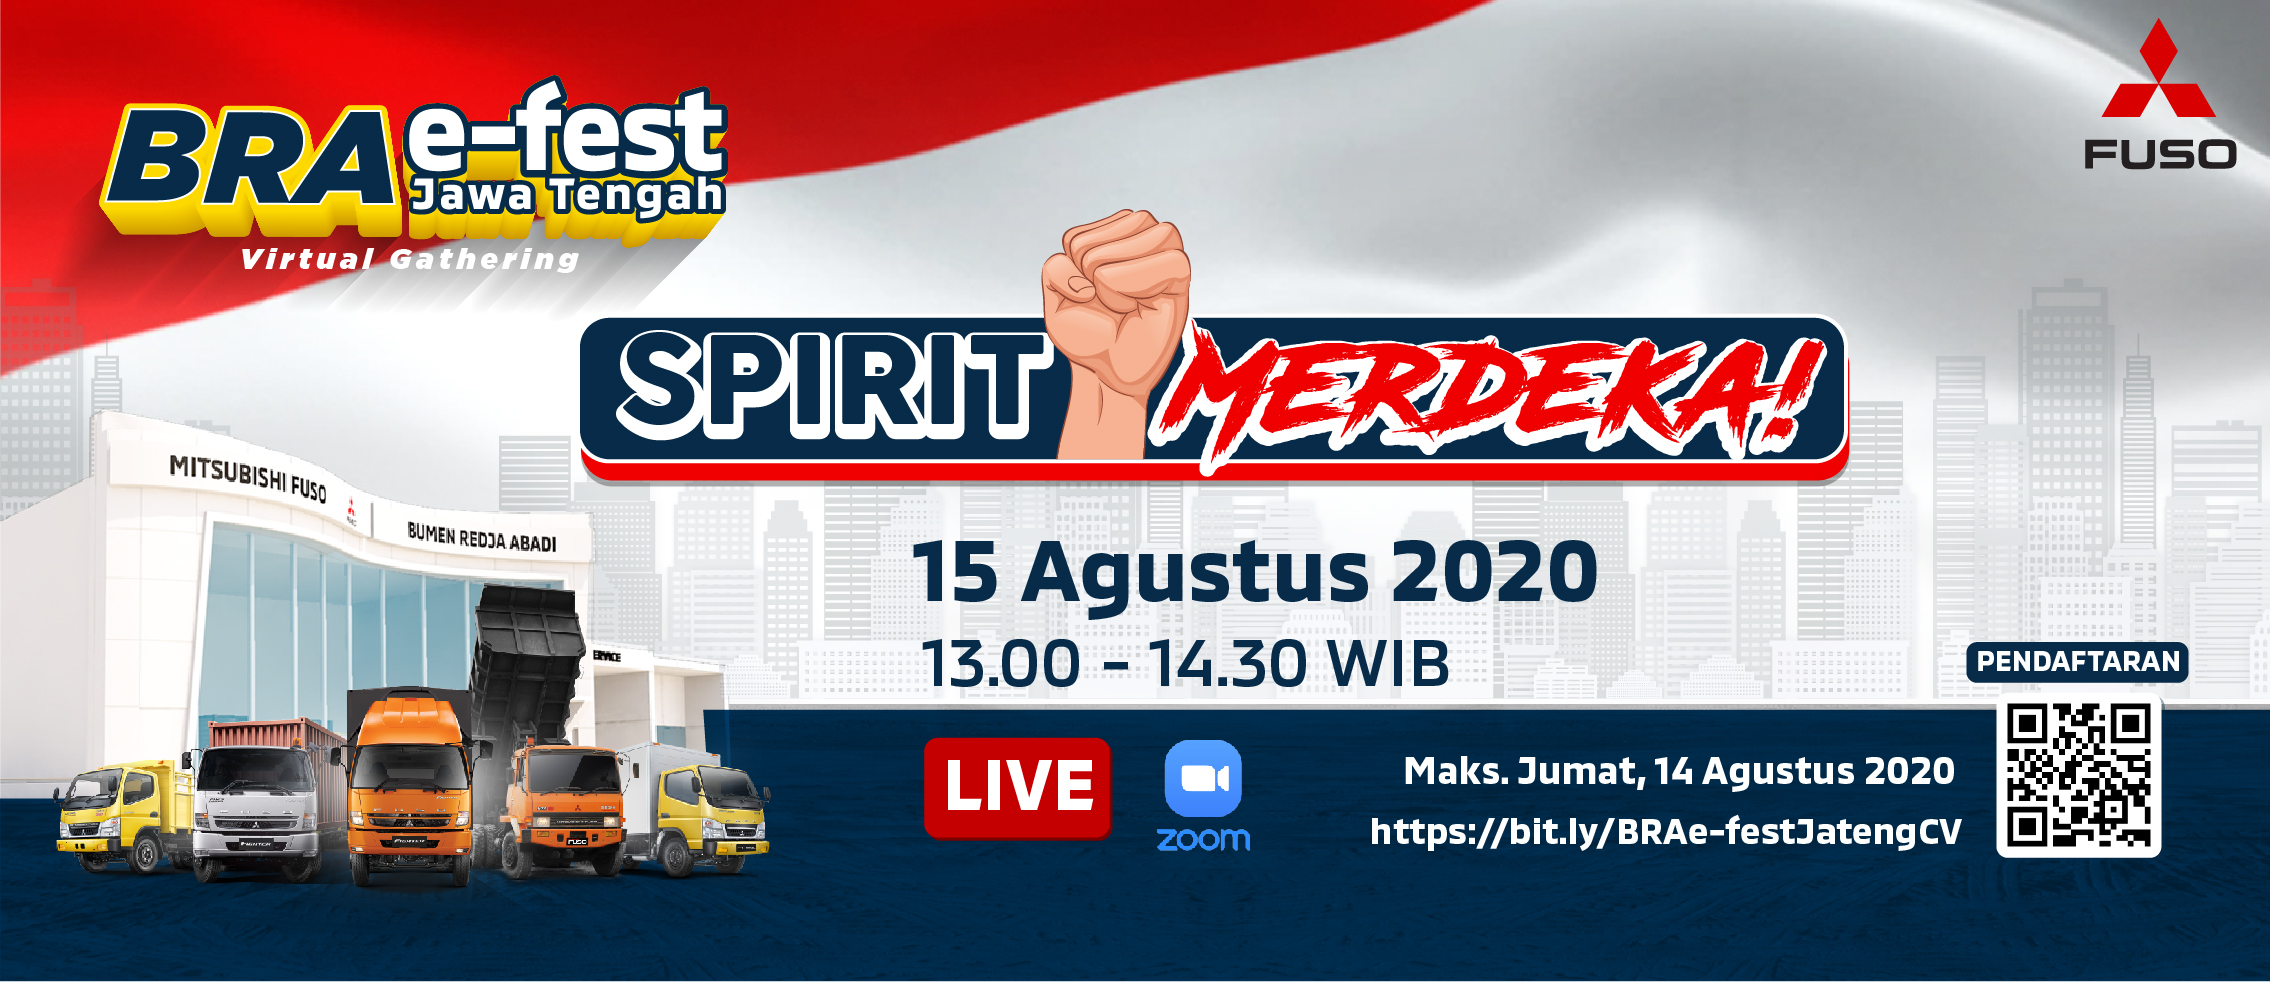 BRA e-fest; Spirit Merdeka bersama Jawa Tengah